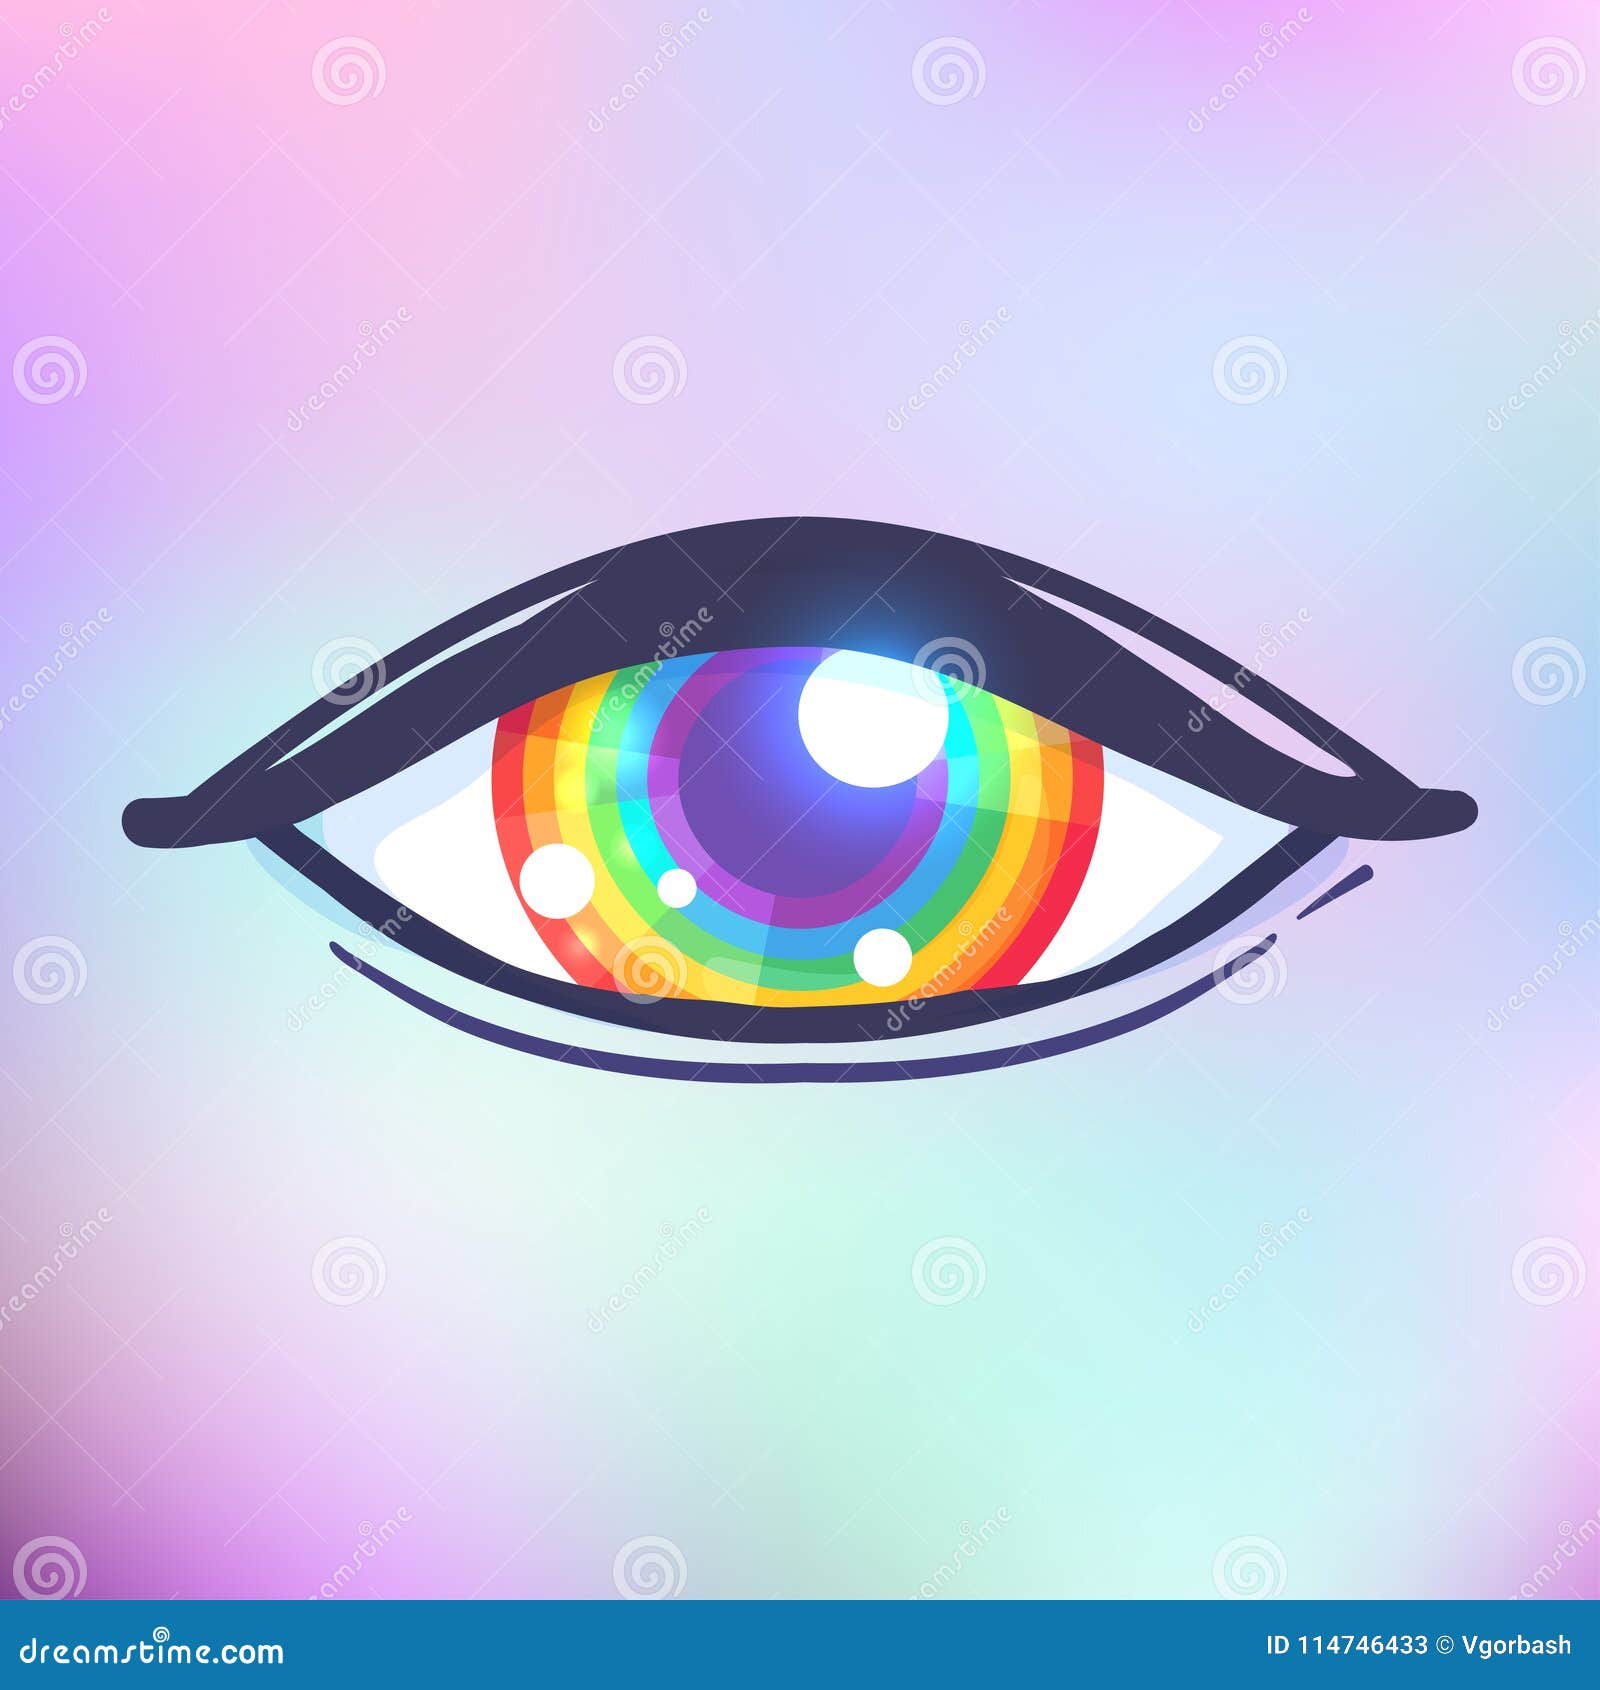 Rainbow Colored Eye. Flag of LGBT Community Inside Eyeball. Vector ...